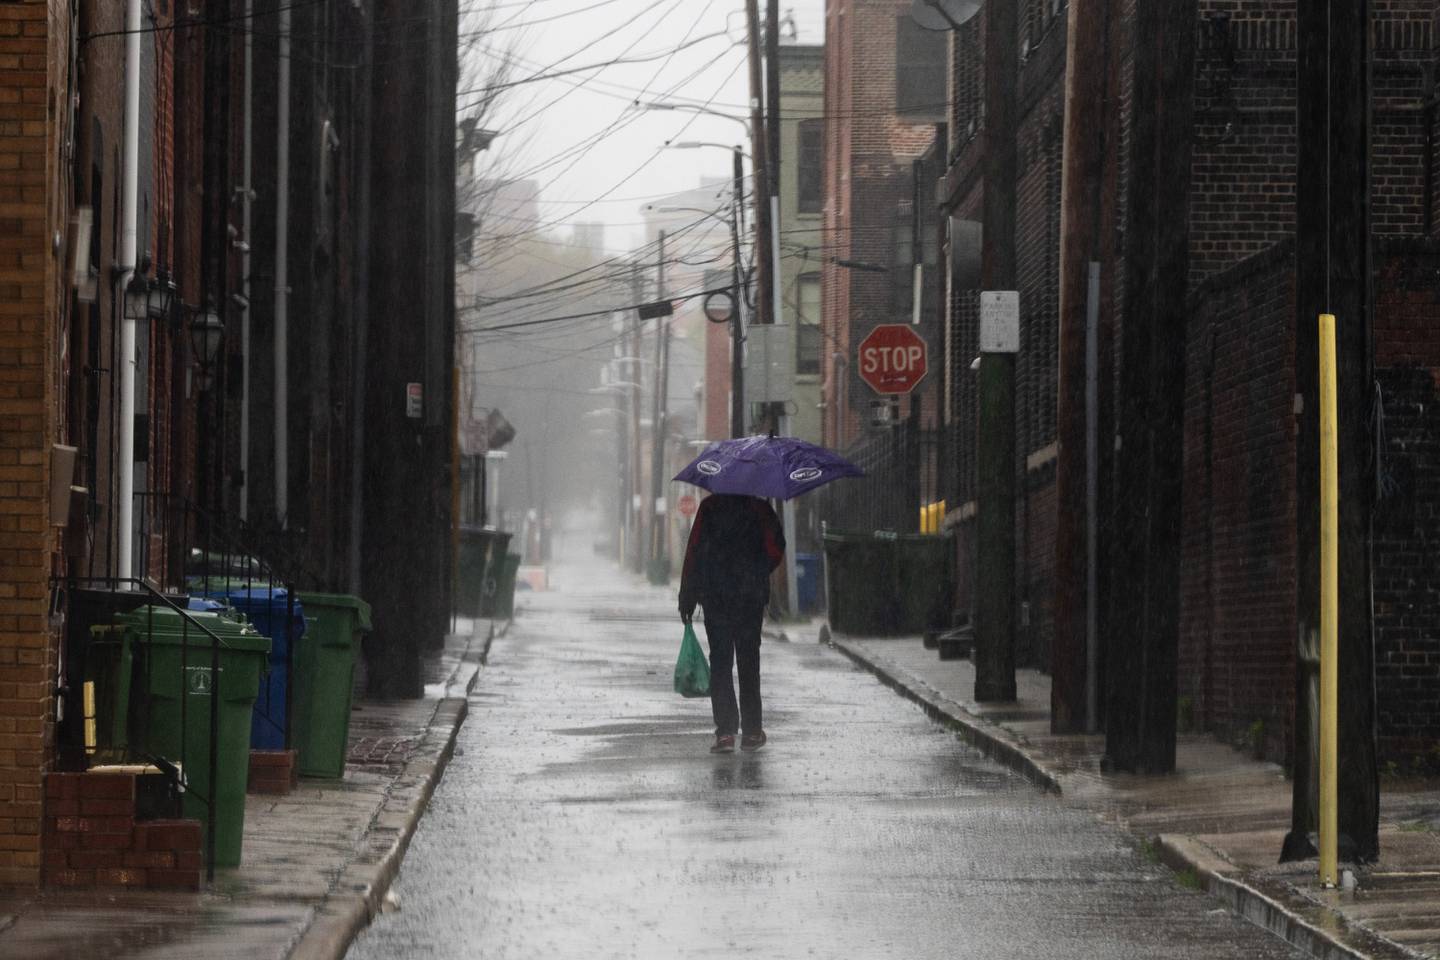 A person holding an umbrella walks down an alley in the rain.